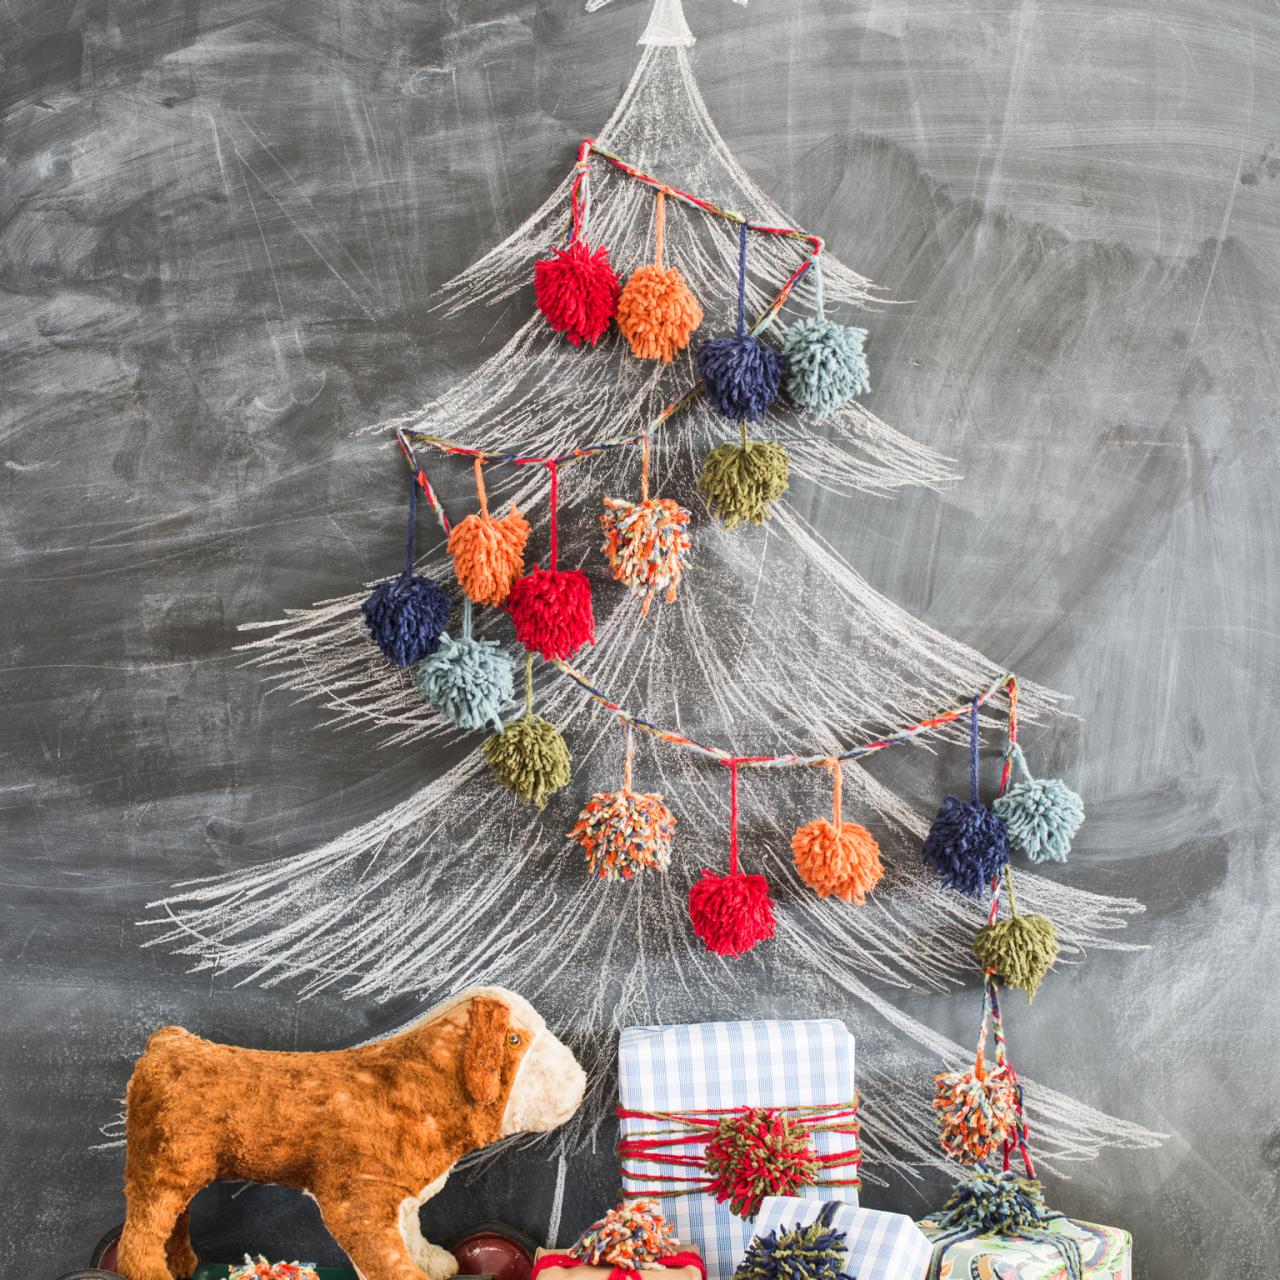 Kids' Craft: Make a Pom-Pom Christmas Garland